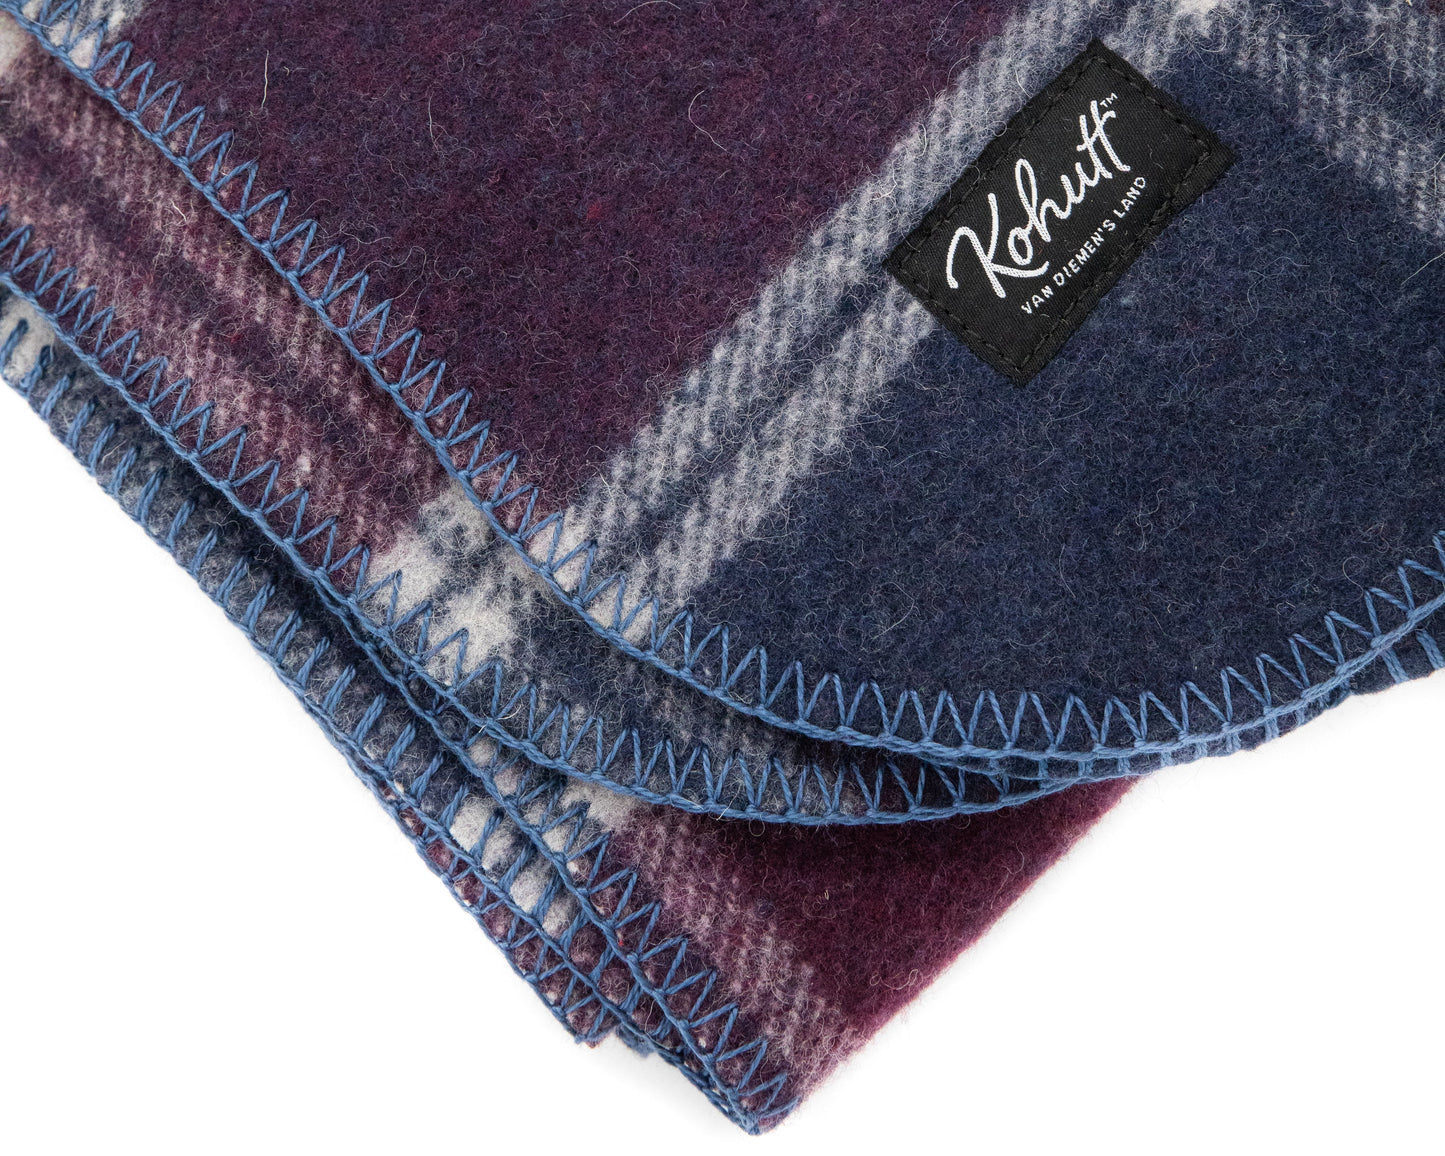 Australian made wool army blanket in burgundy tartan - Kohutt™ - made in Tasmania